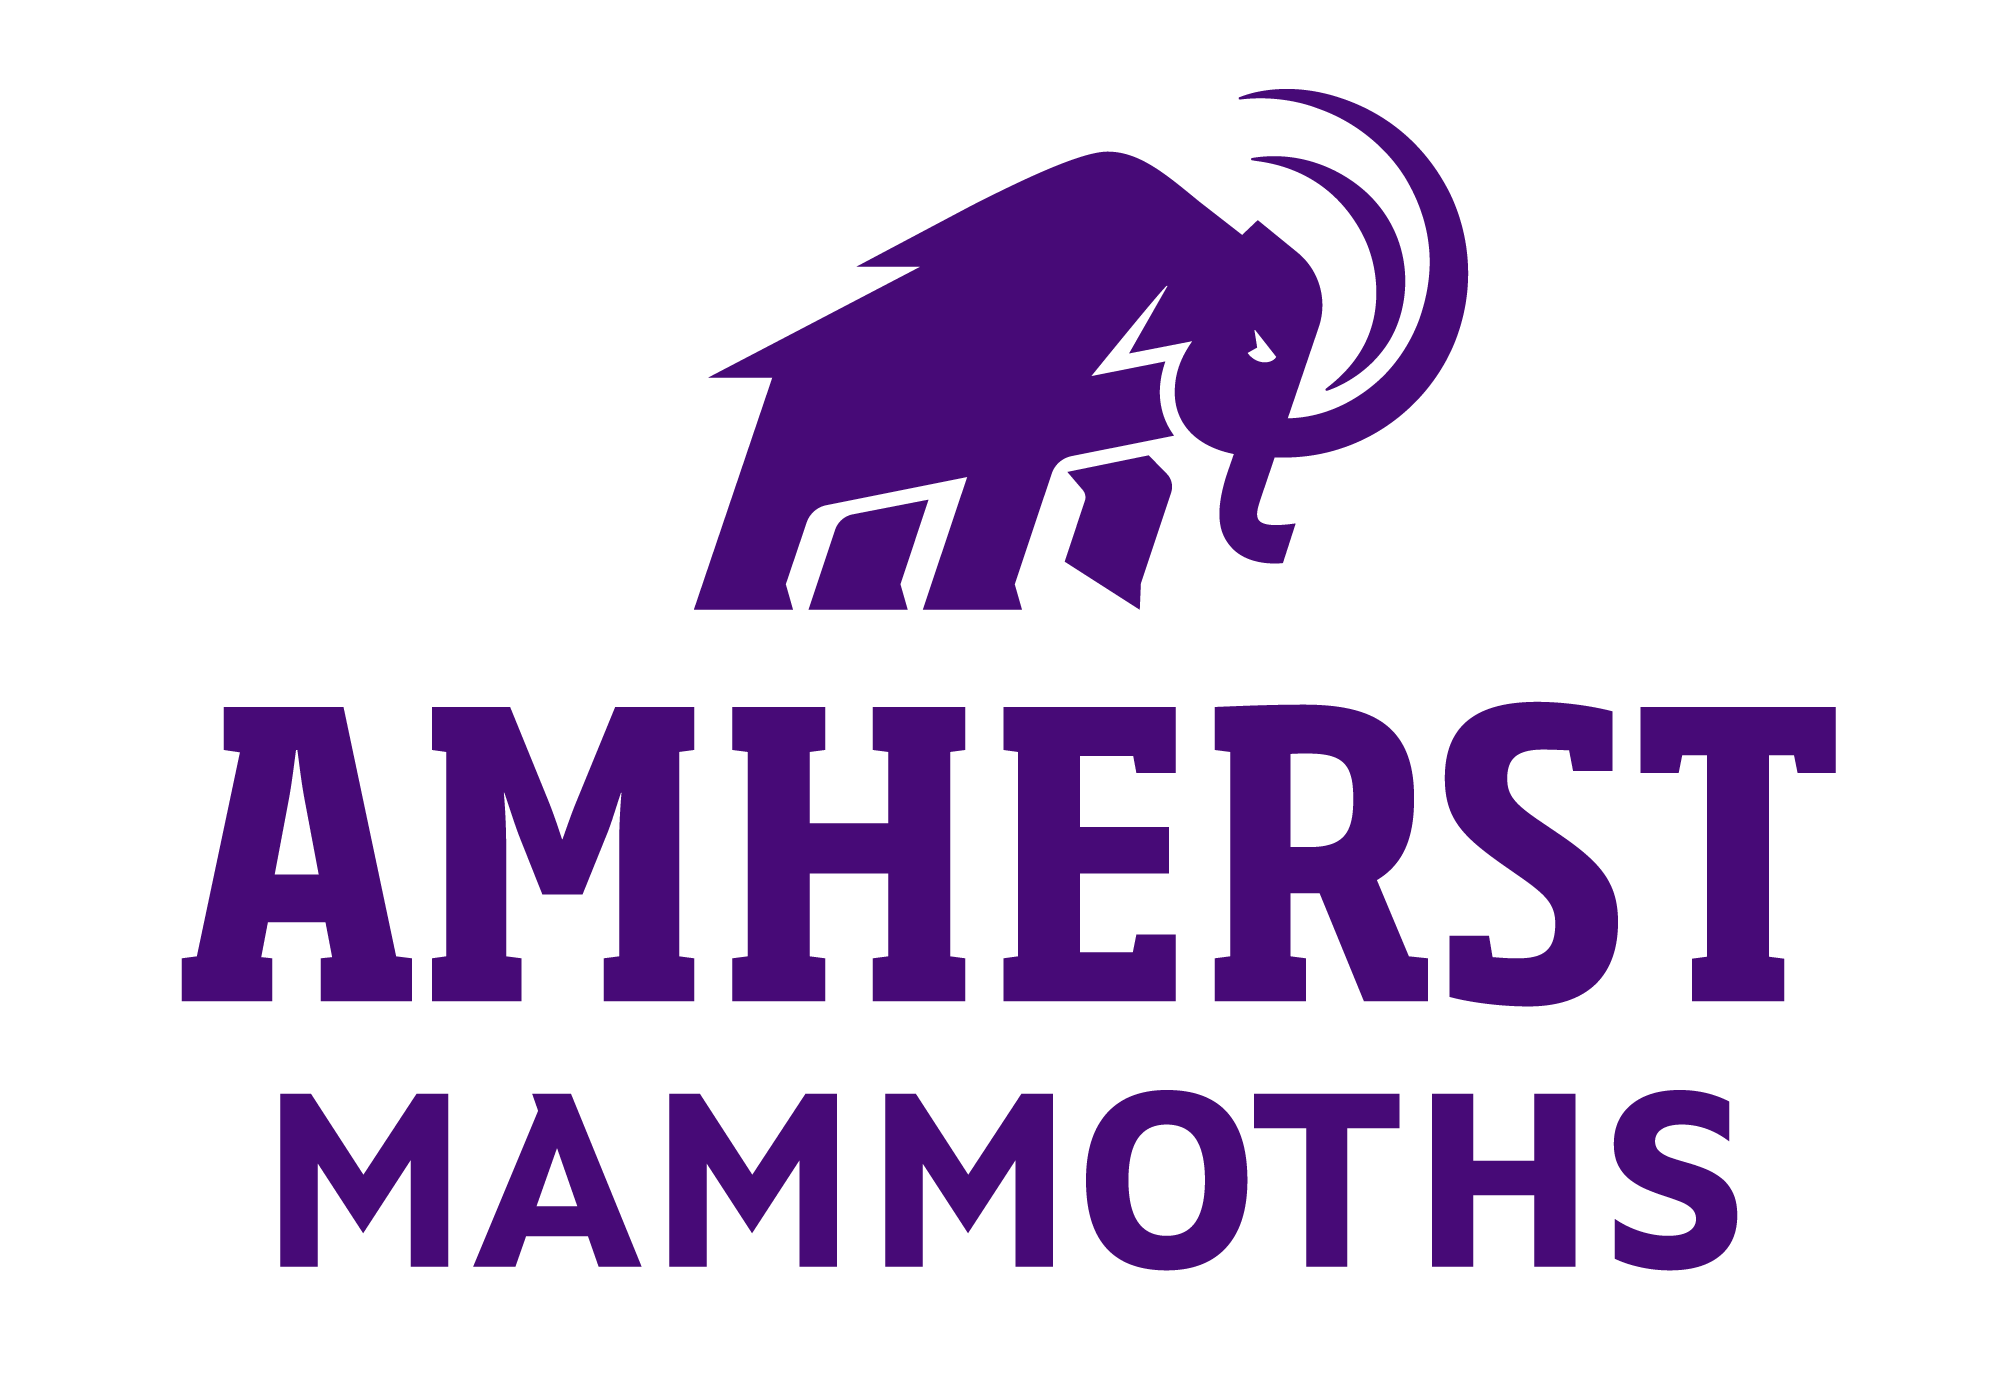 Mammoth logo with caption Amherst Mammoths